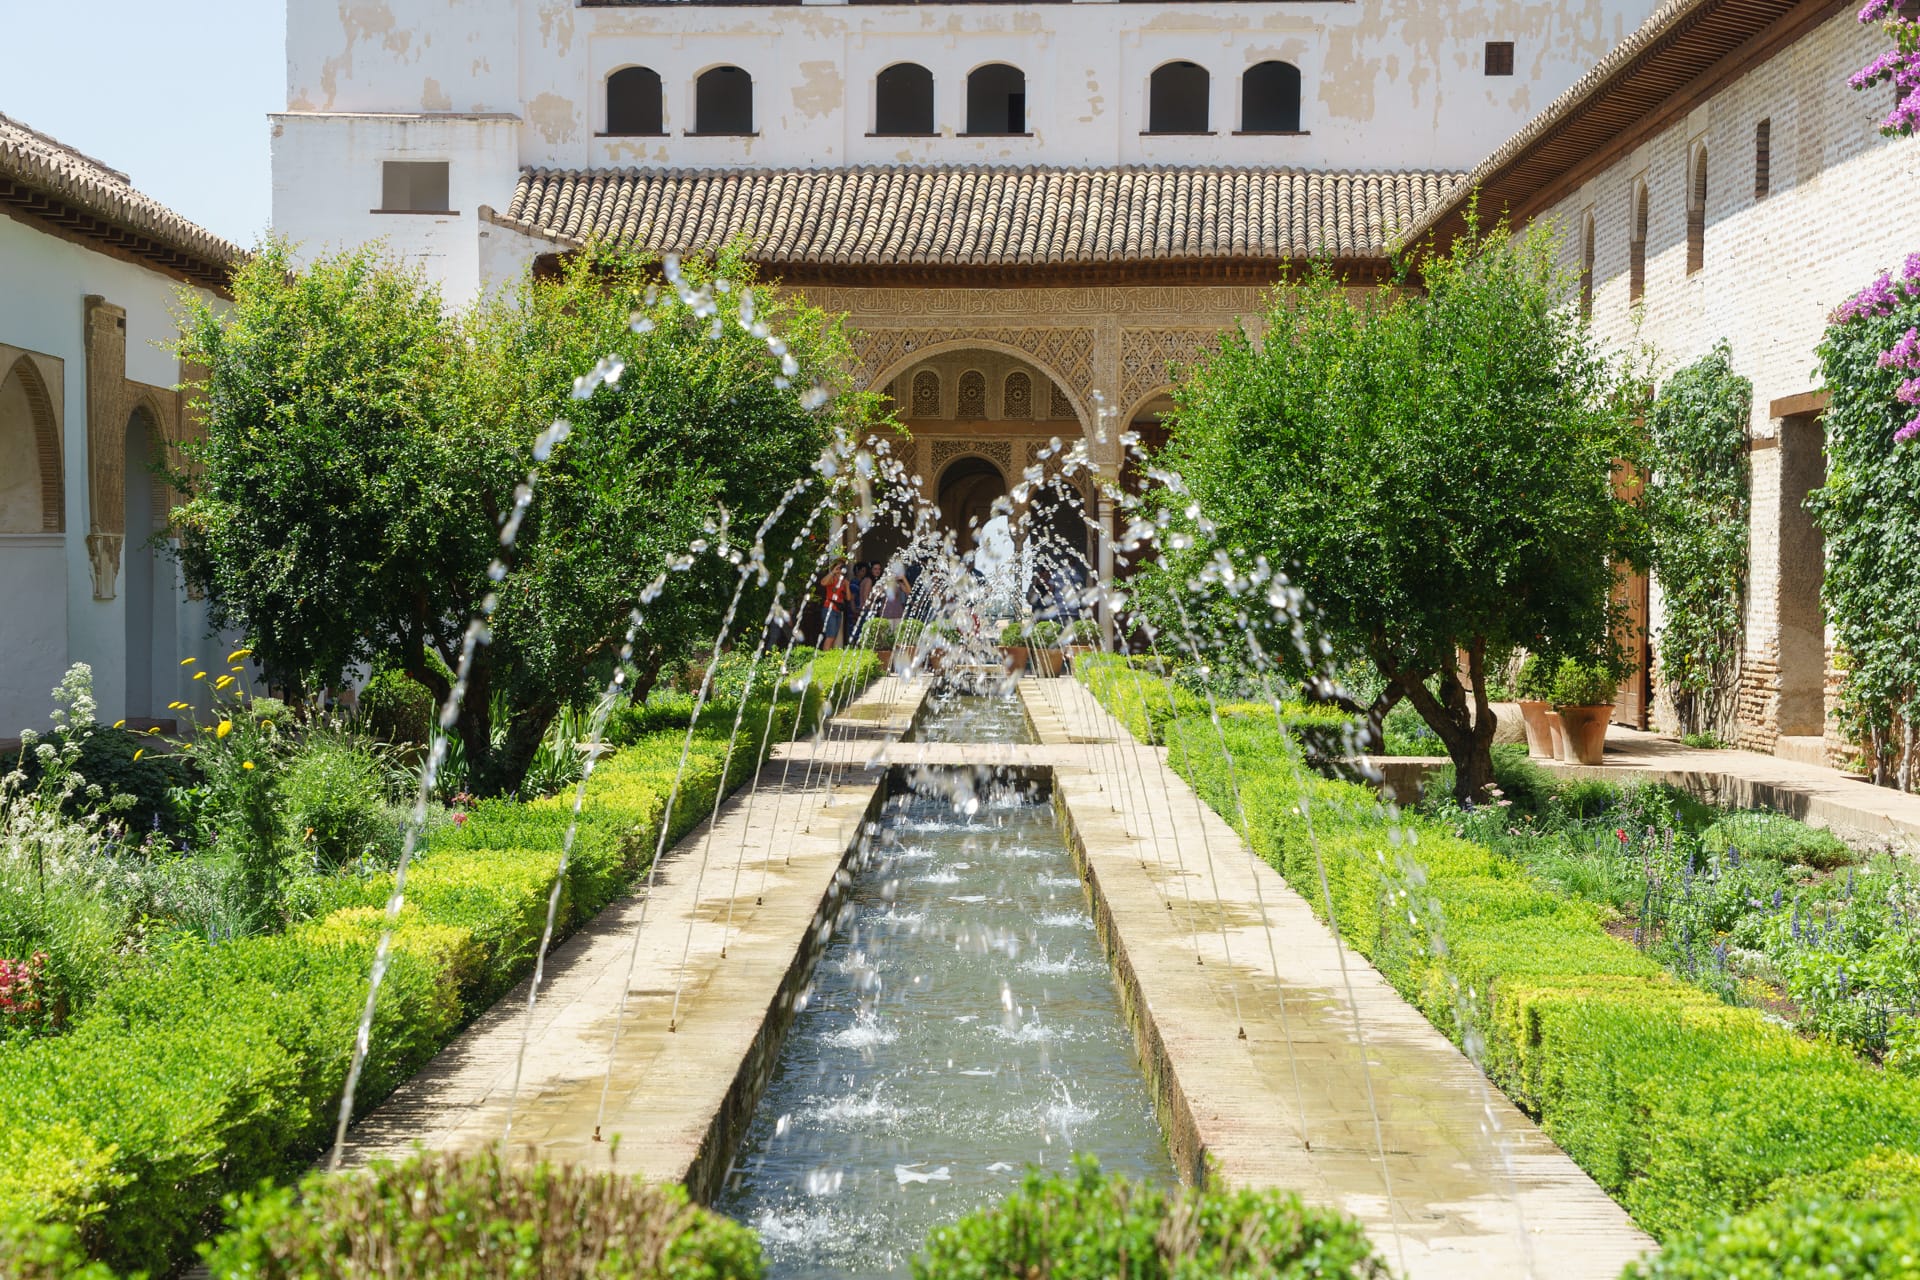 Alhambra Photo Essay